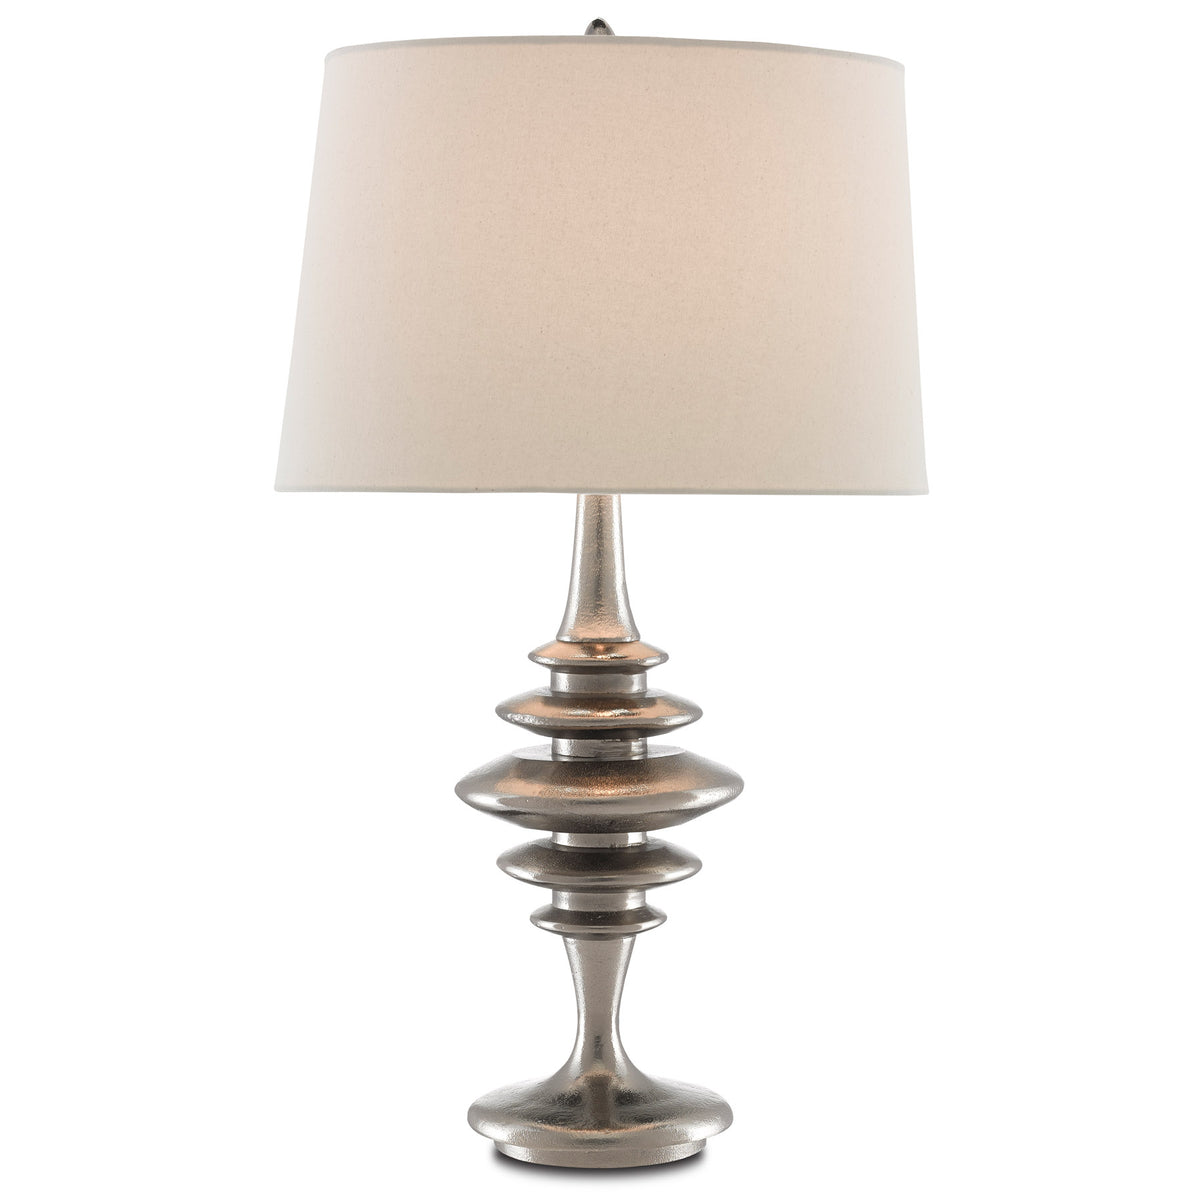 Cressida Table Lamp